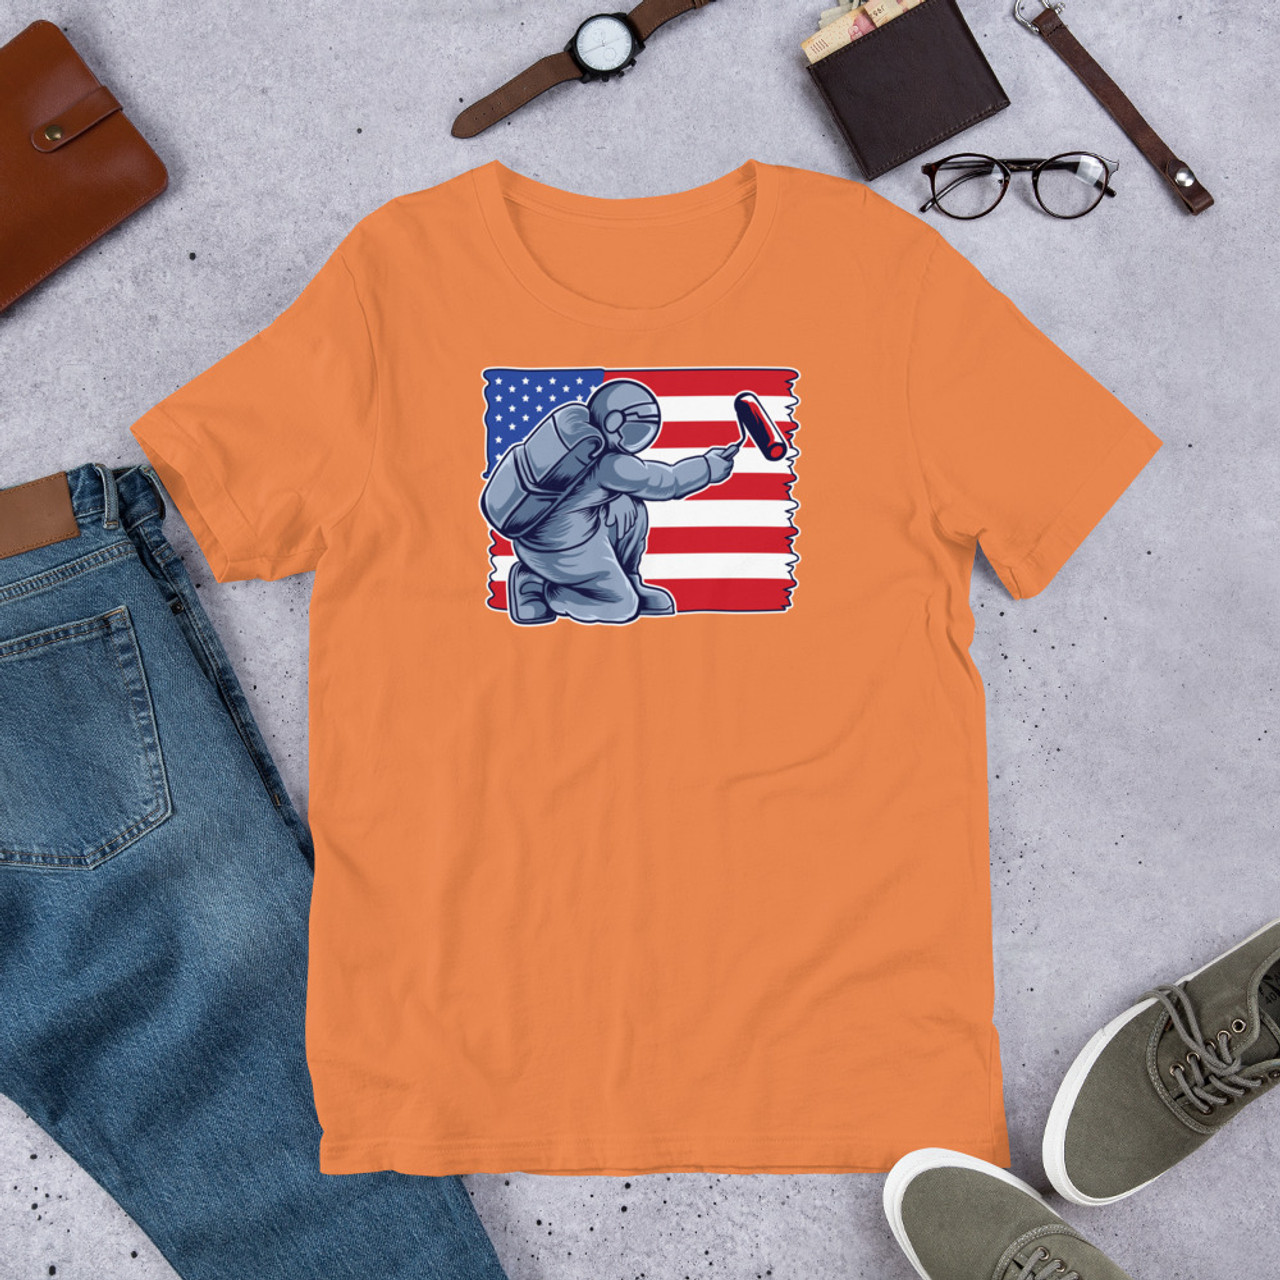 Burnt Orange T-Shirt - Bella + Canvas 3001 Astronaut Painting Flag